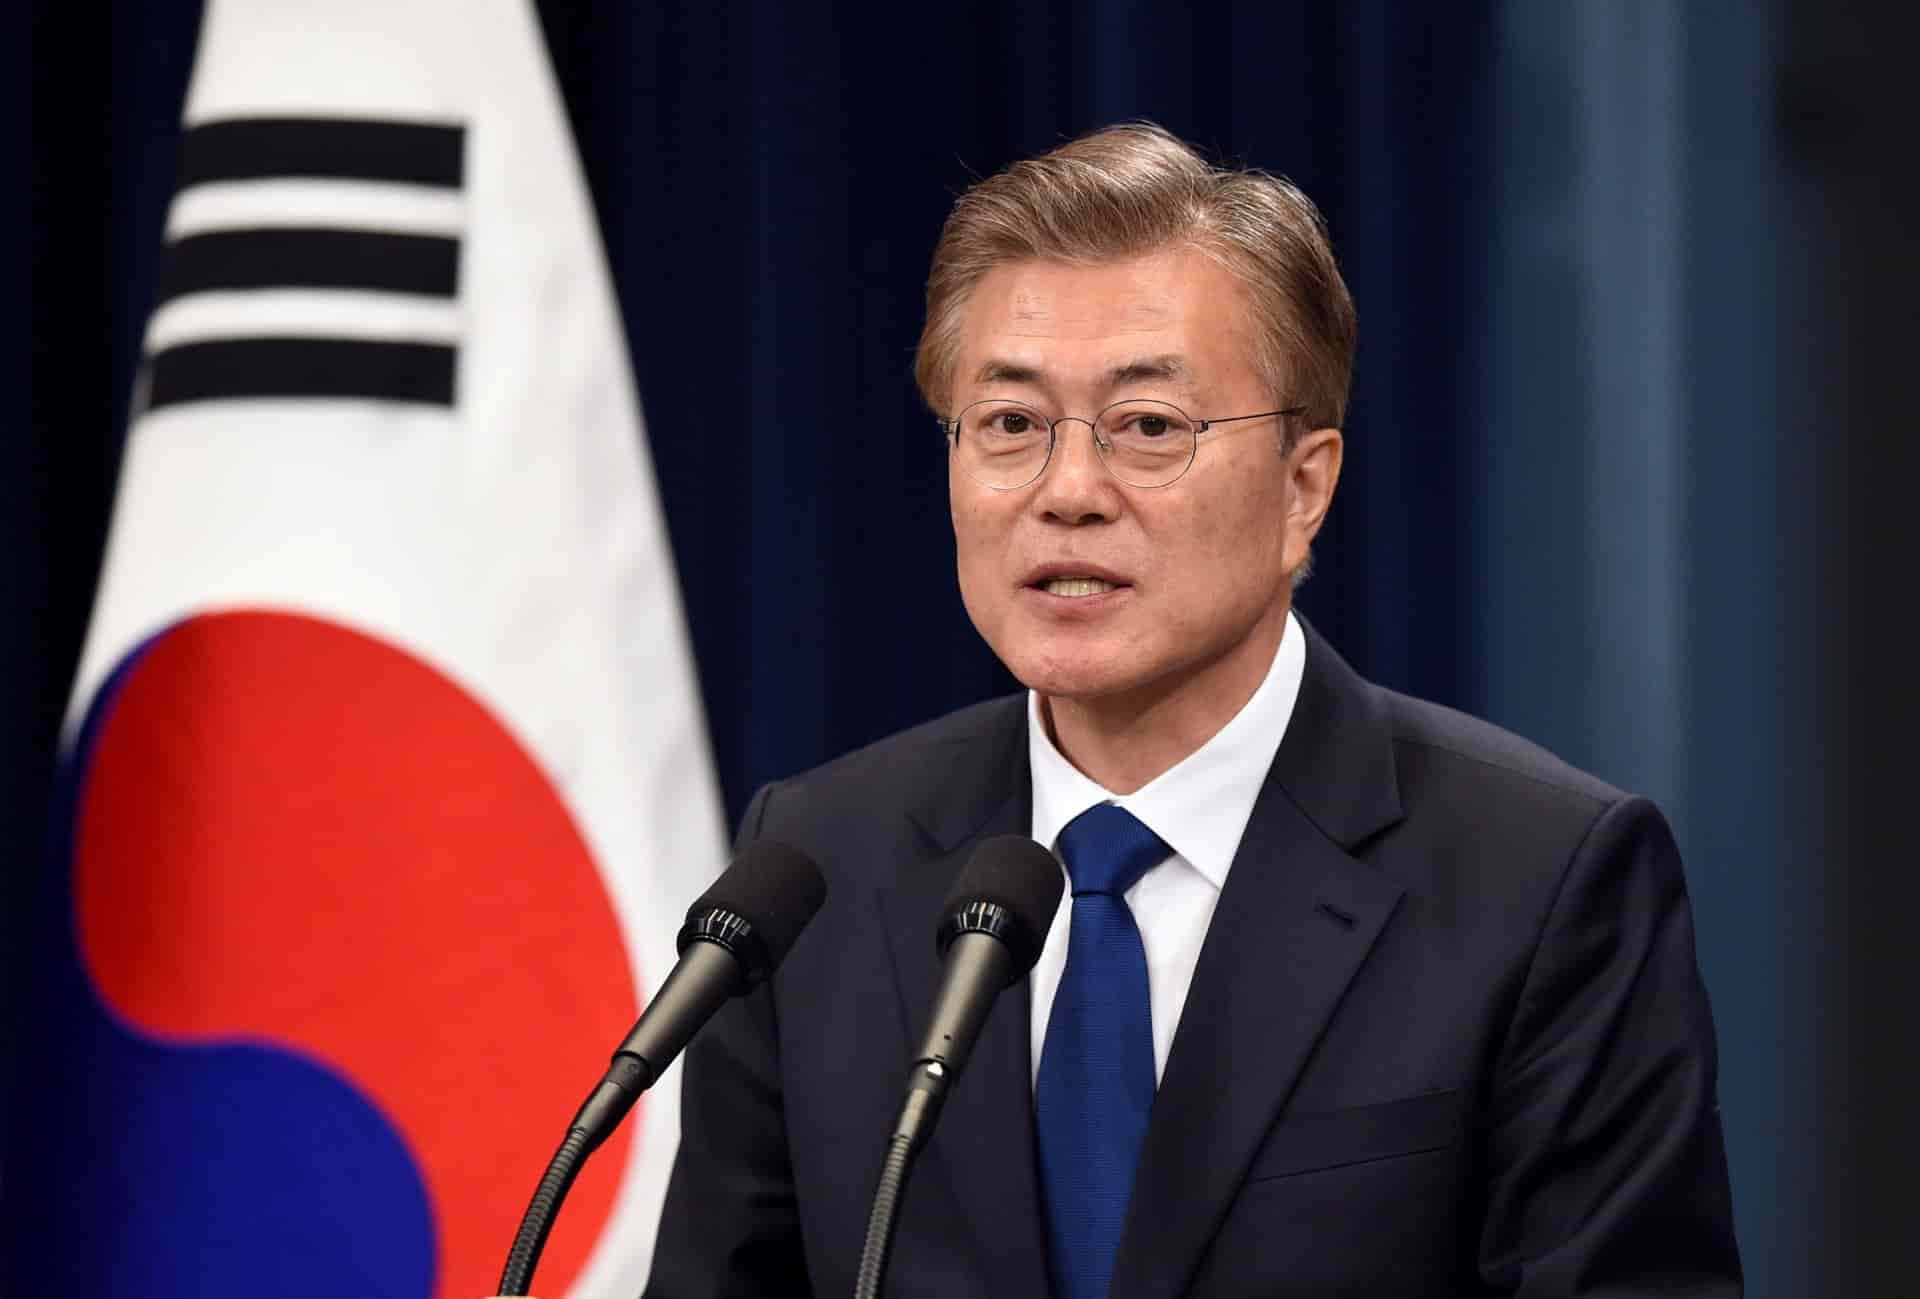 Президент Южной Кореи